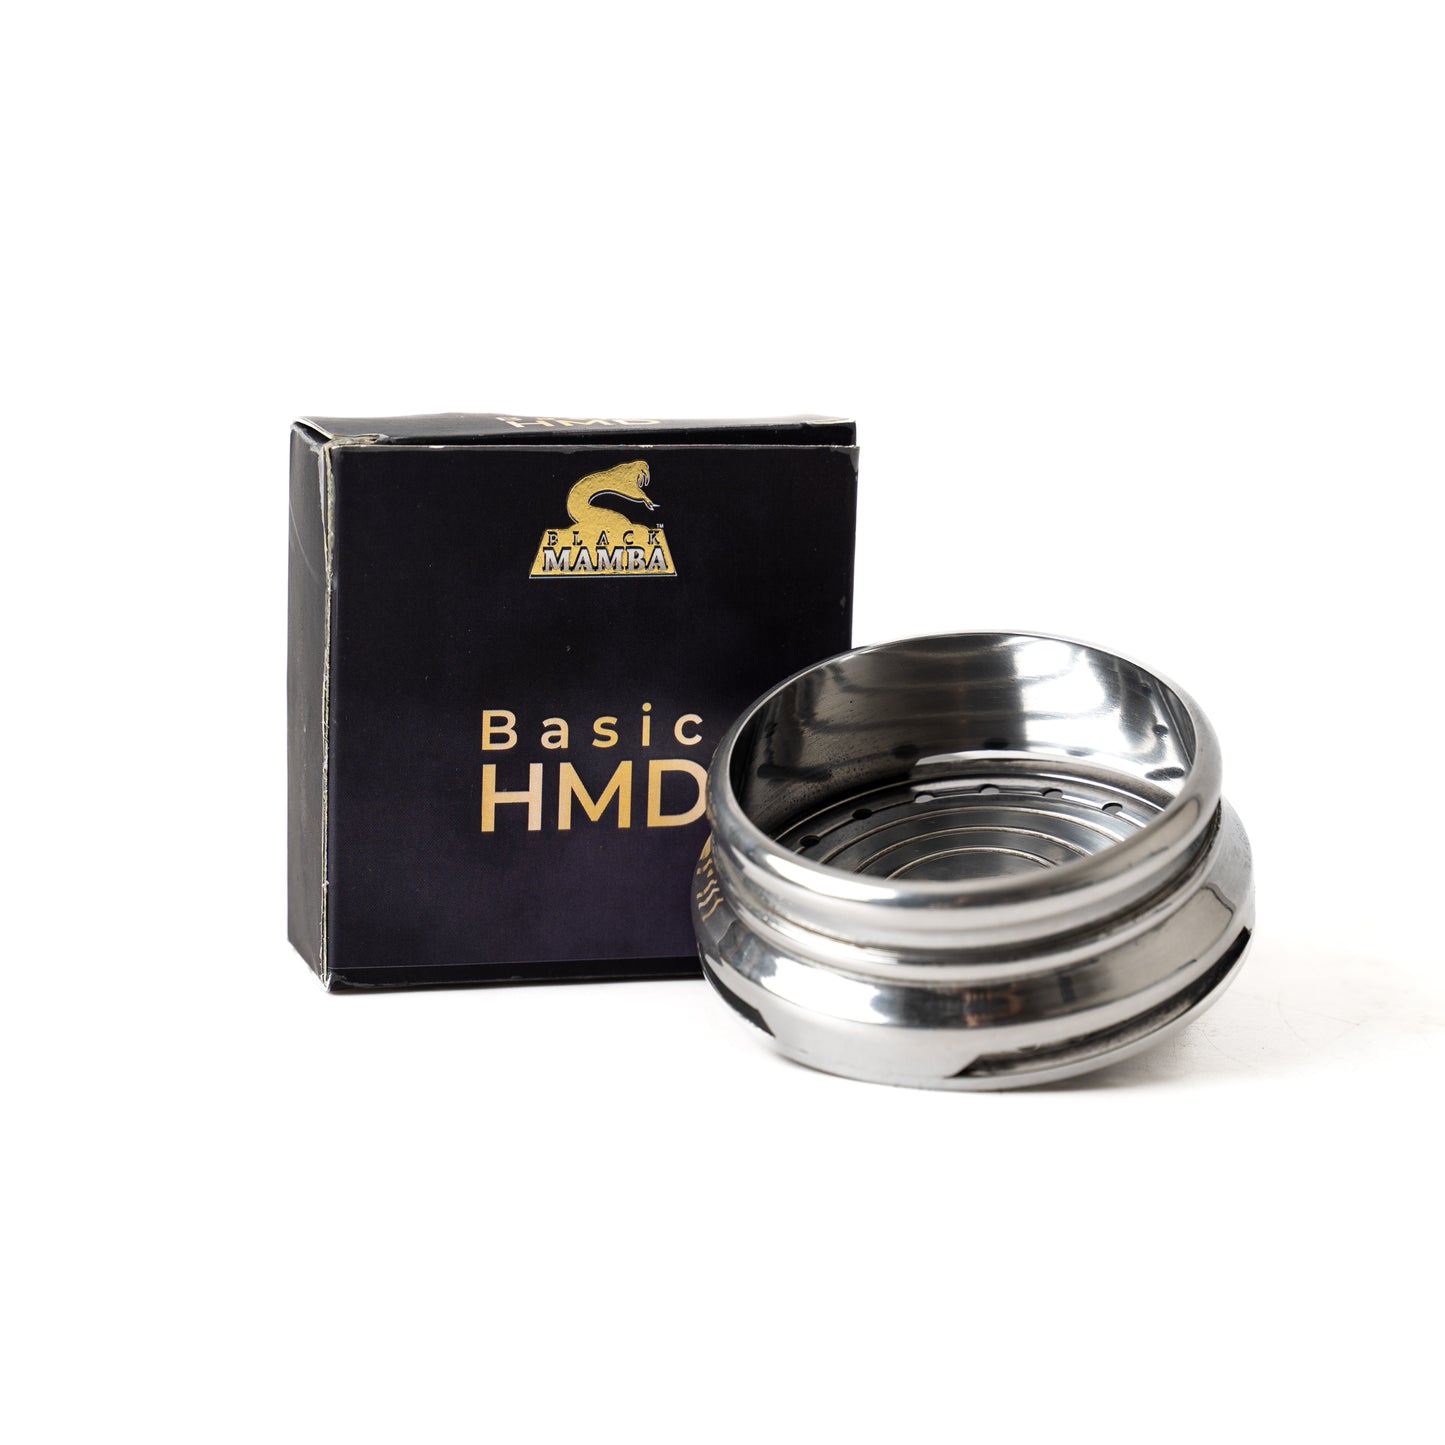 Black Mamba Basic Hookah HMD - Heat Management Device